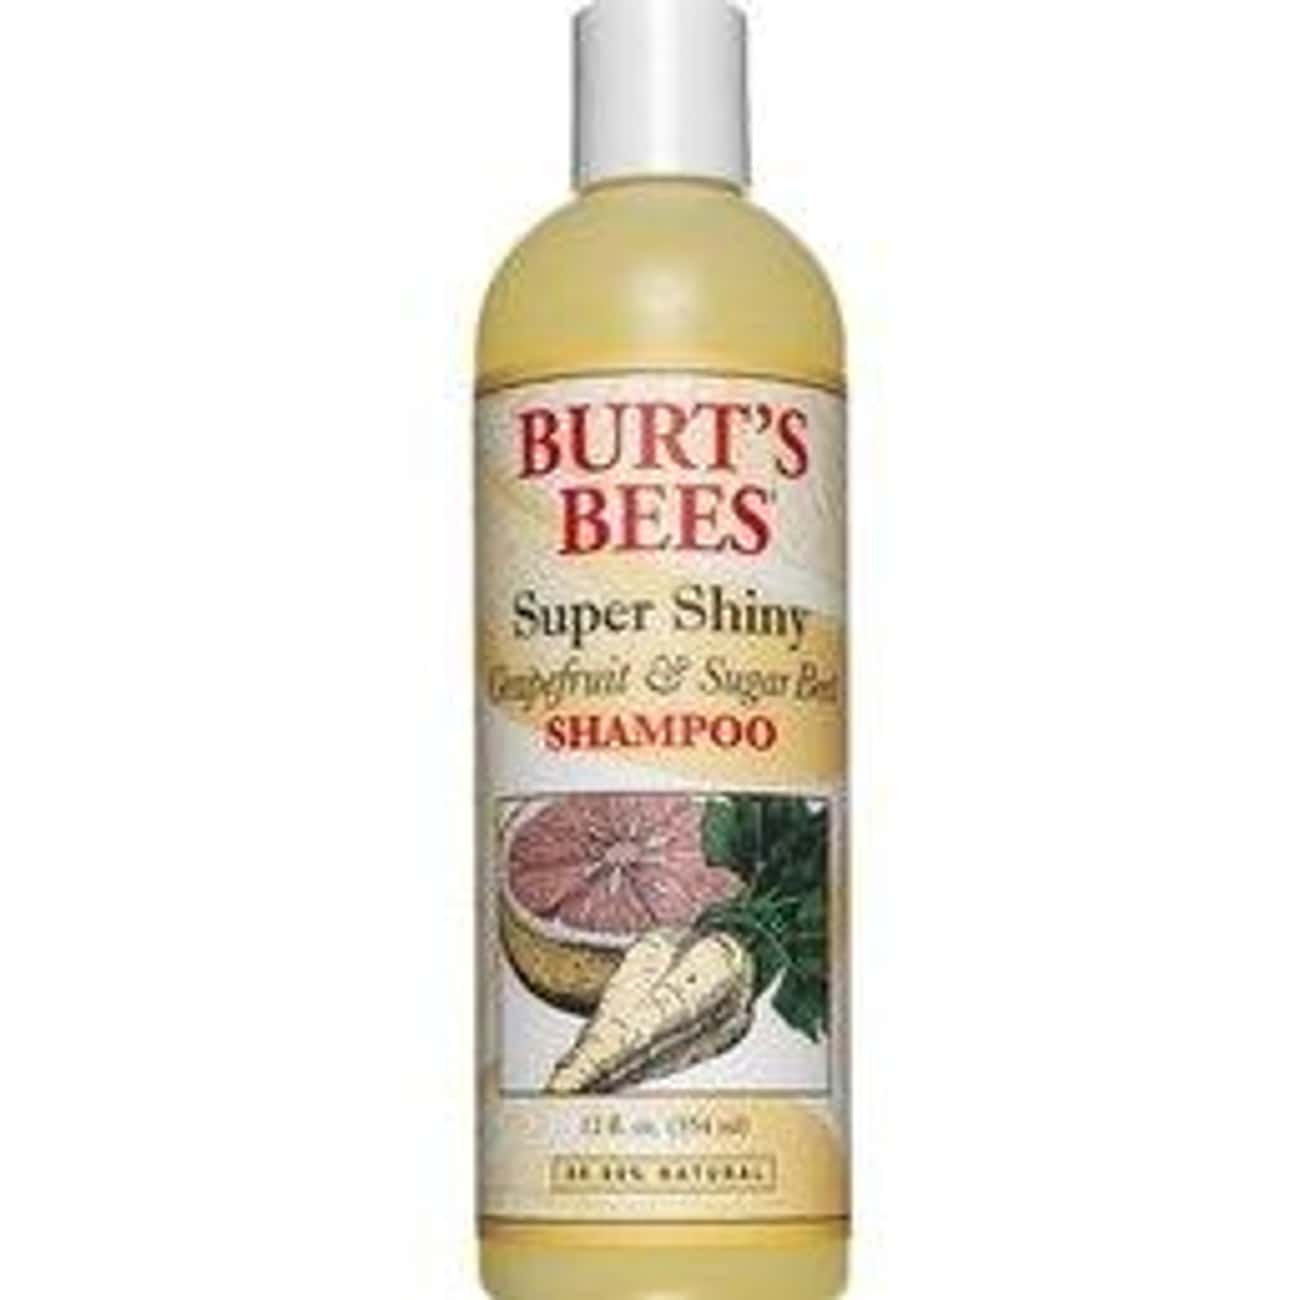 Burt's Bees Super Shiny Grapefruit &amp; Sugar Beet Shampoo